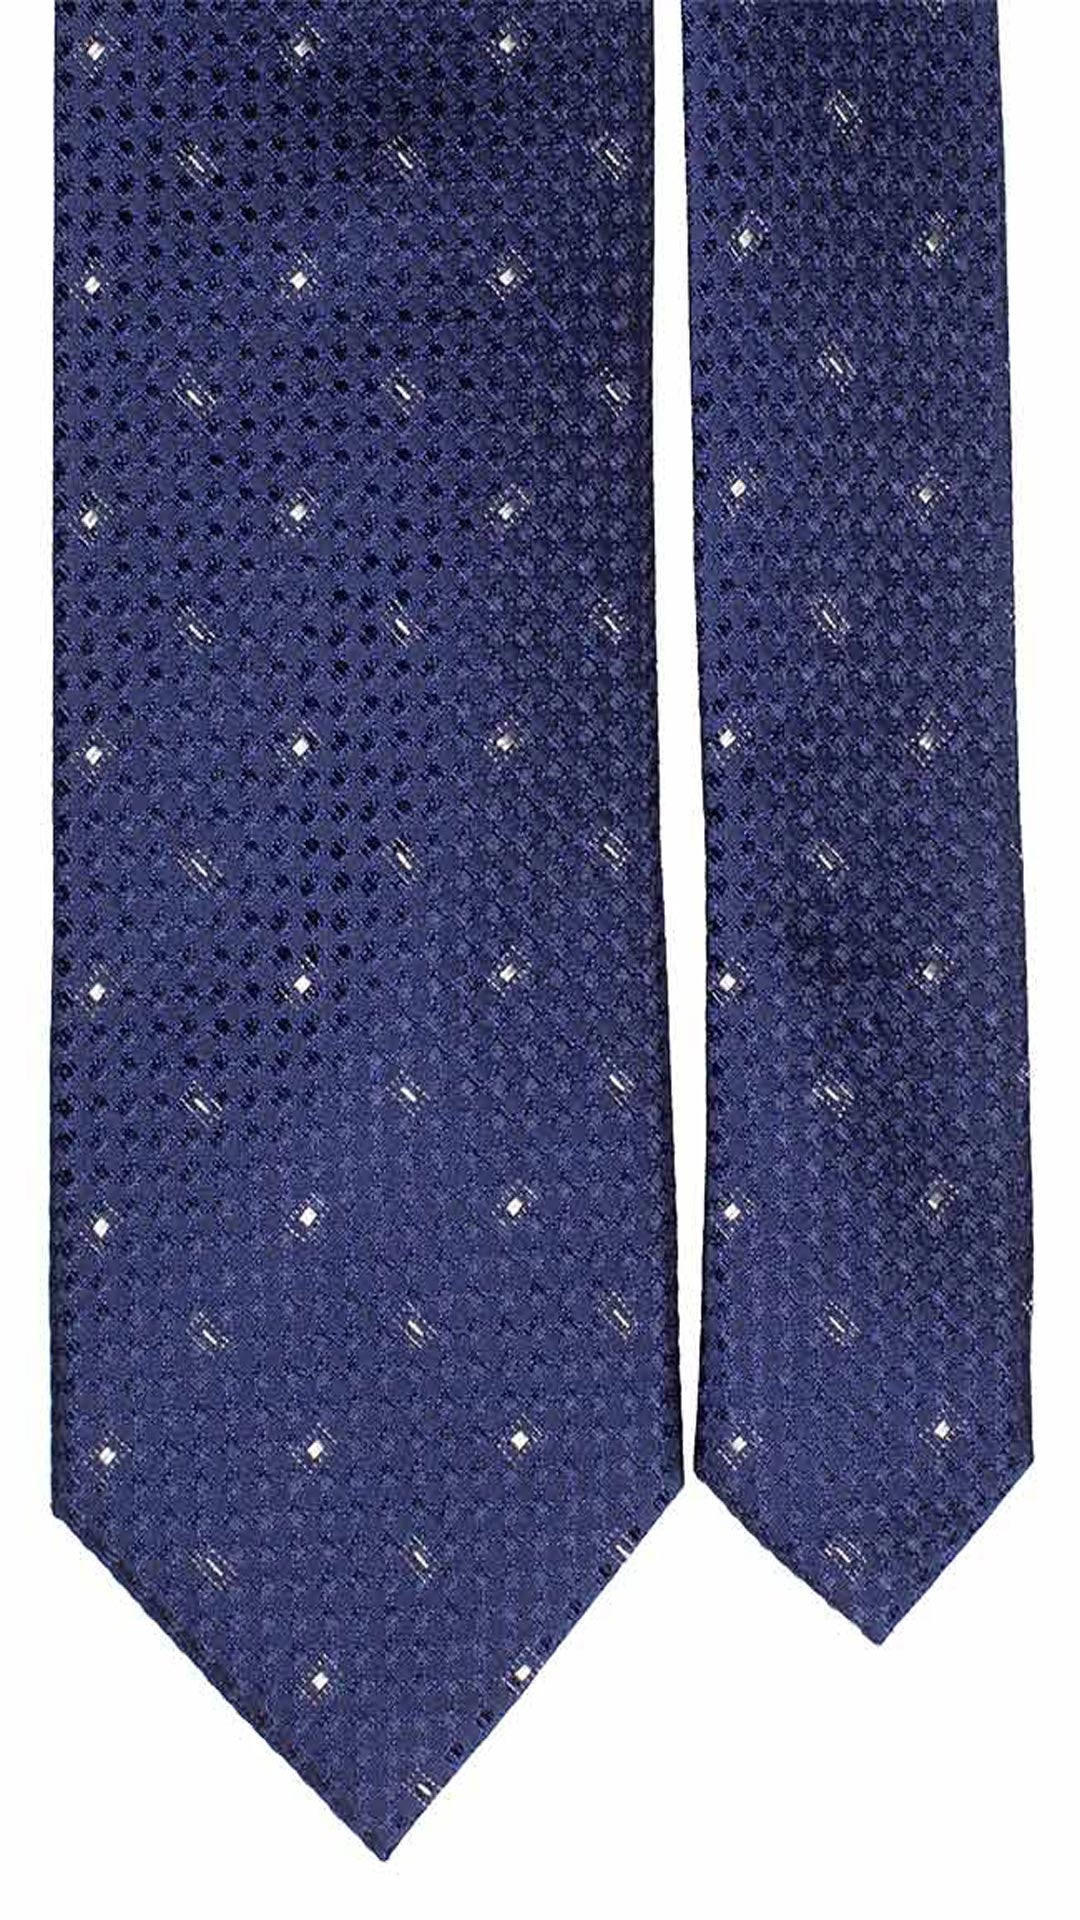 Cravatta da Cerimonia di Seta Bluette Fantasia Bianca Cangiante CY2543 Pala